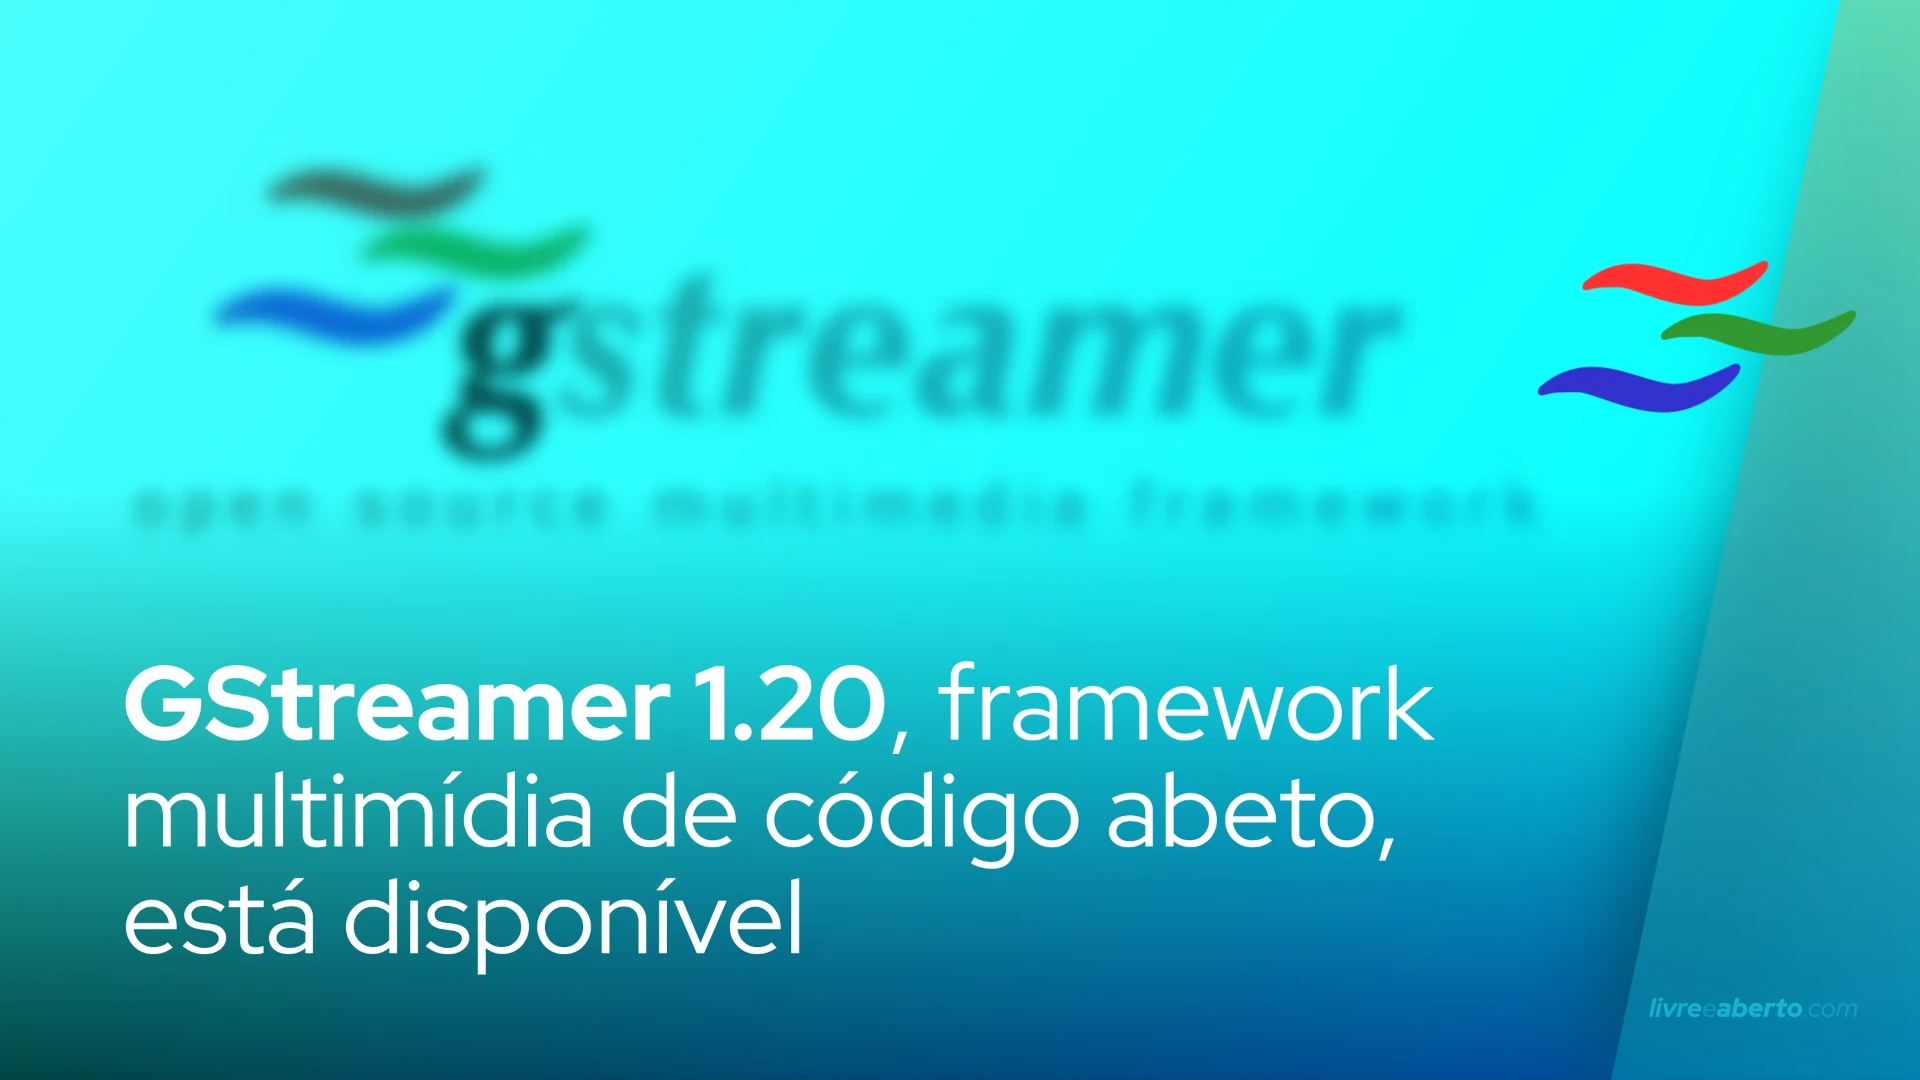 GStreamer 1.20, framework multimídia de código abeto, está disponível